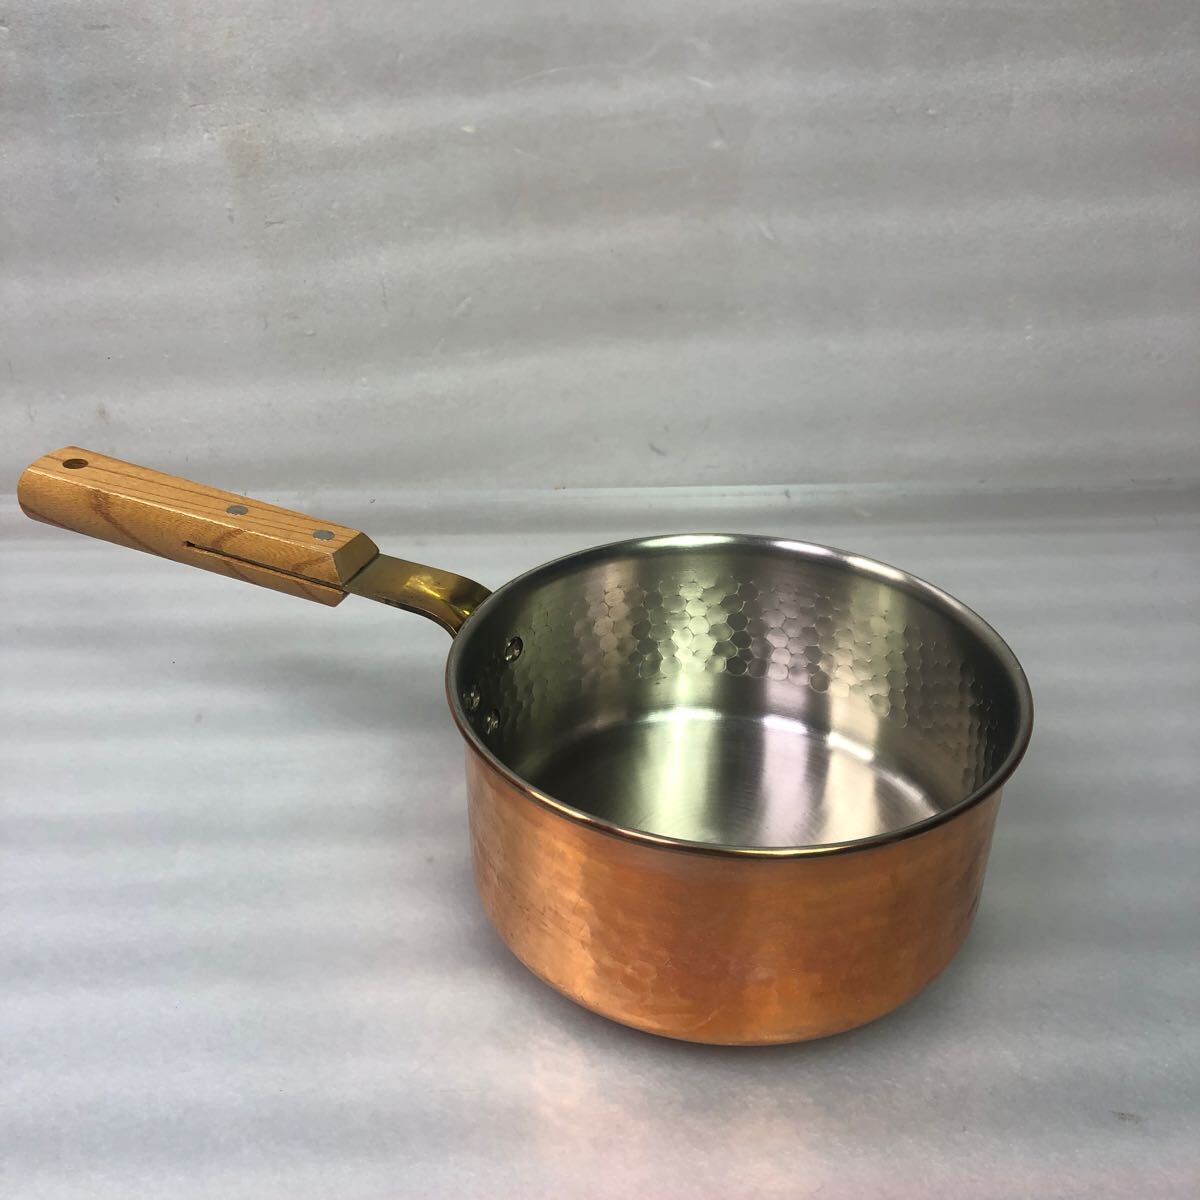  single-handled pot copper made 17 cm